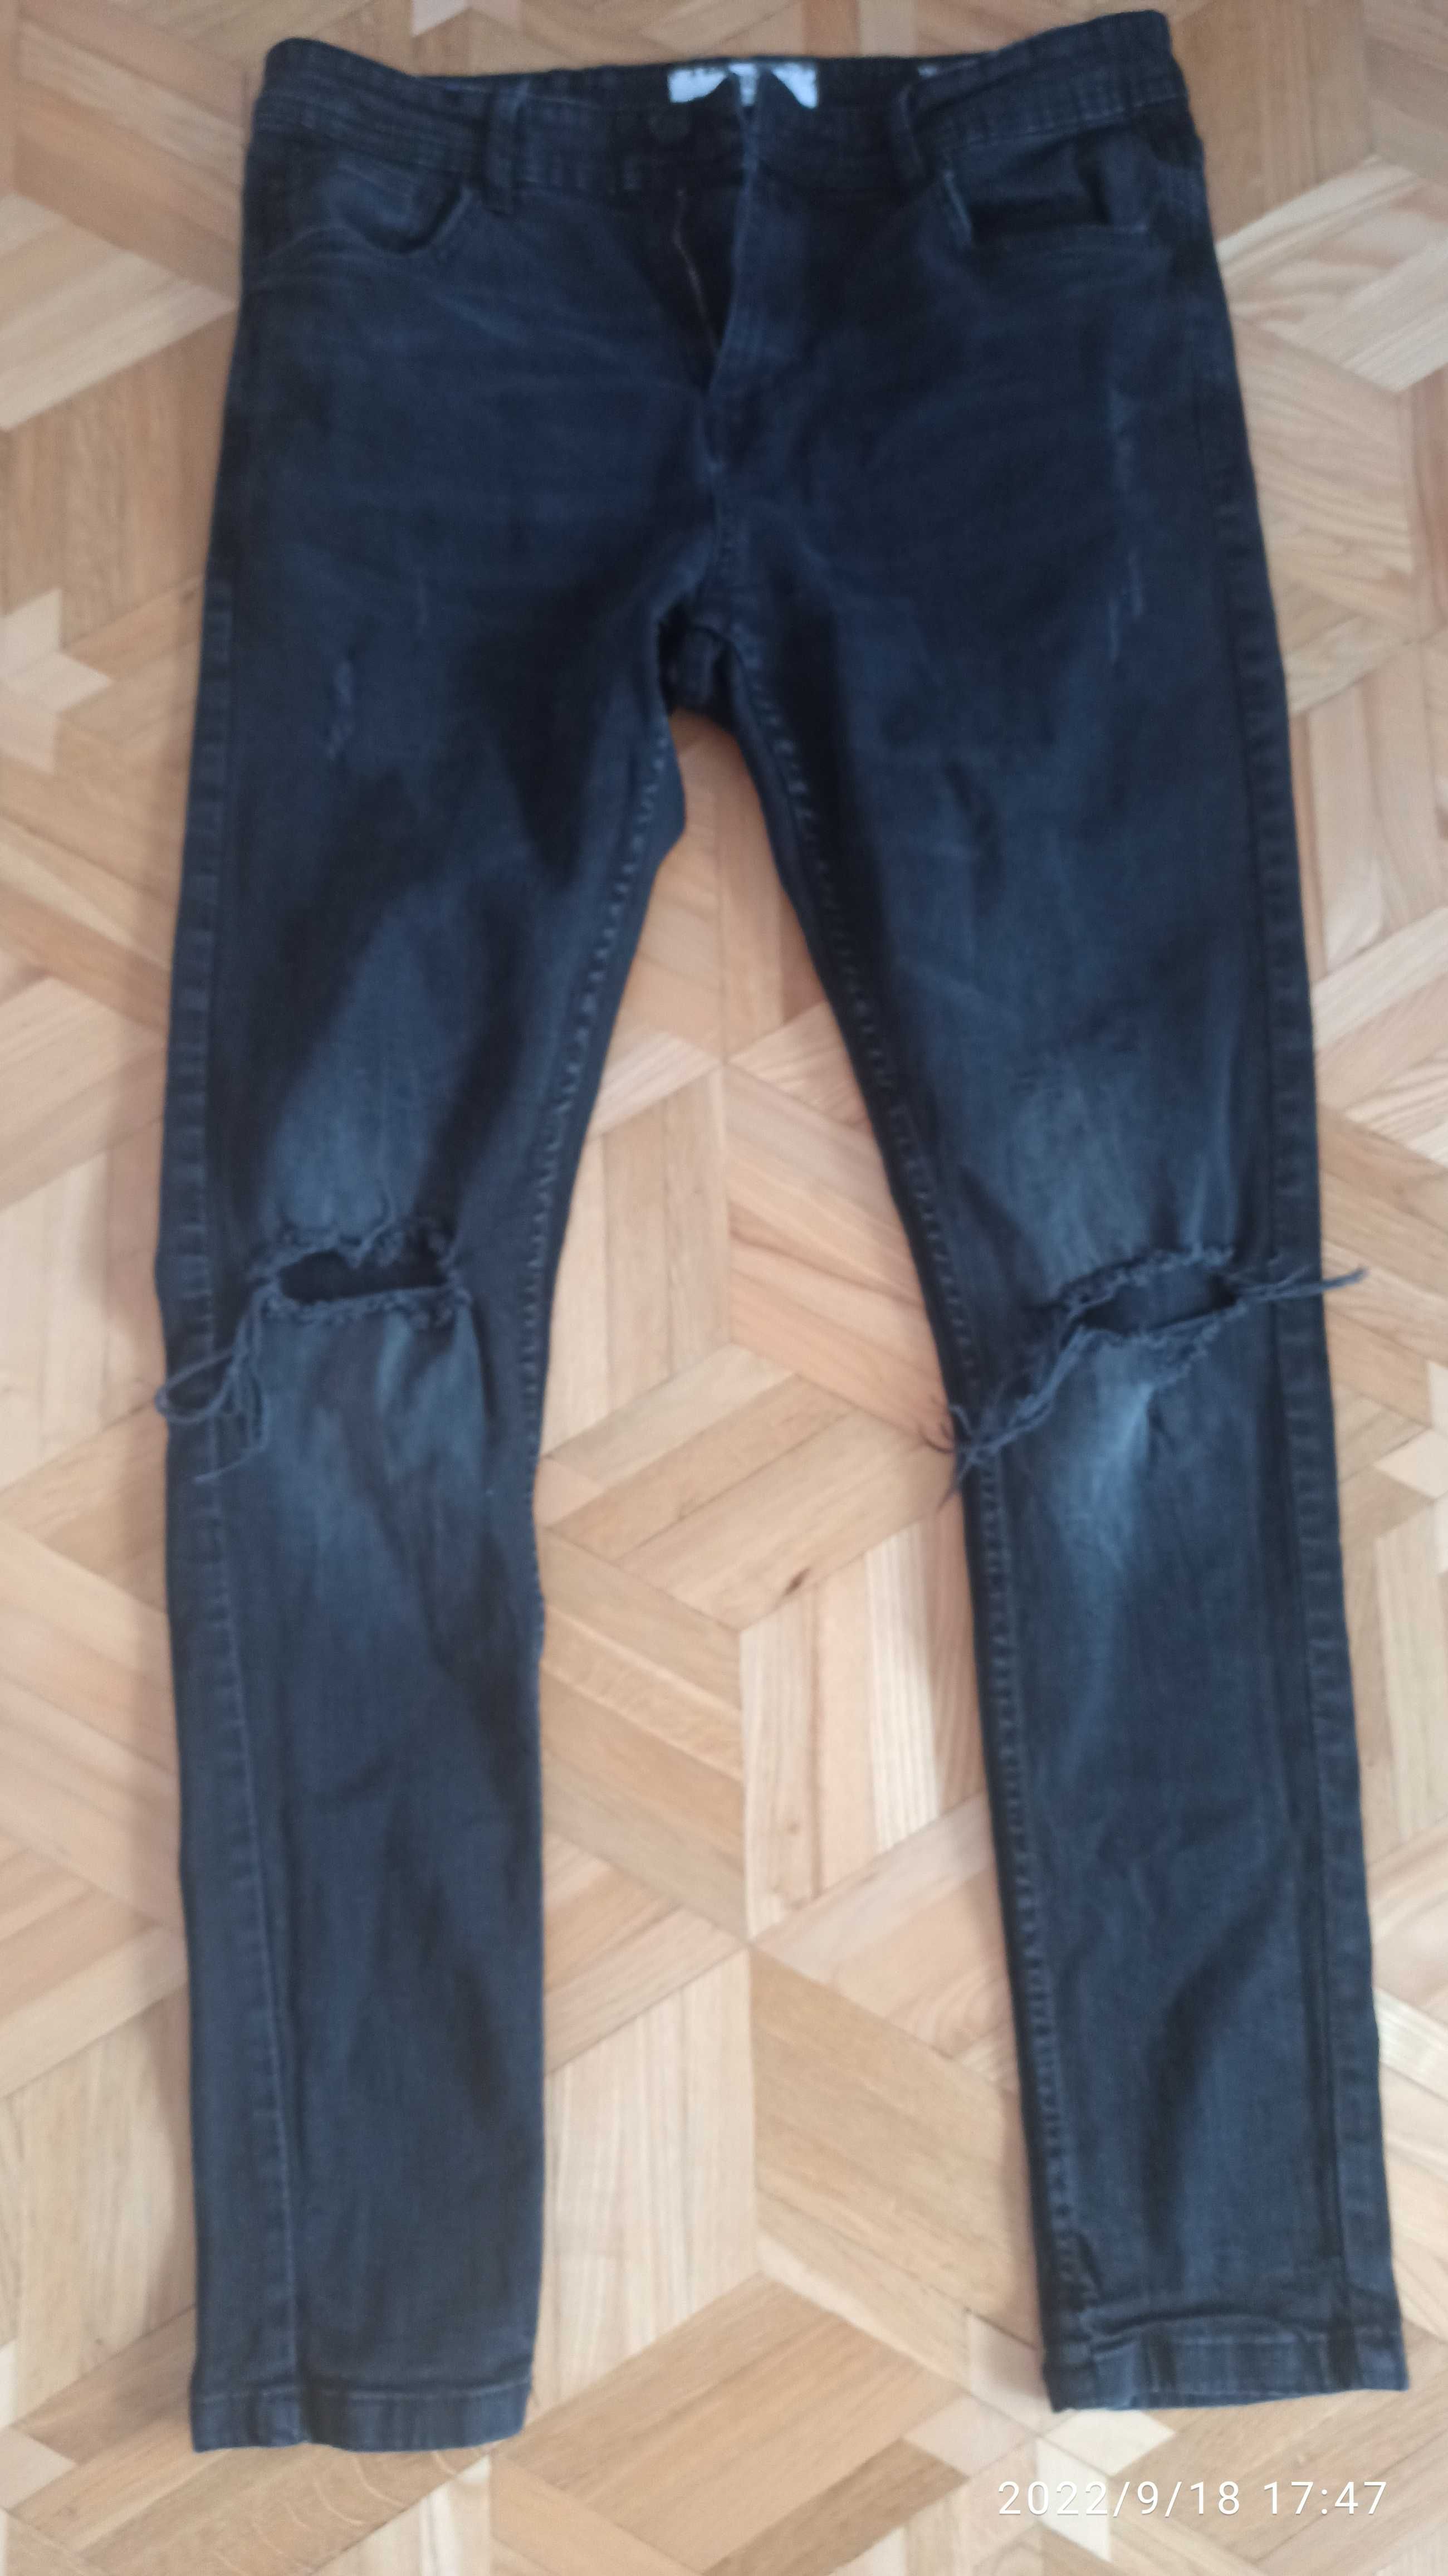 Spodnie czarne, jeans, z dziurami na kolanach